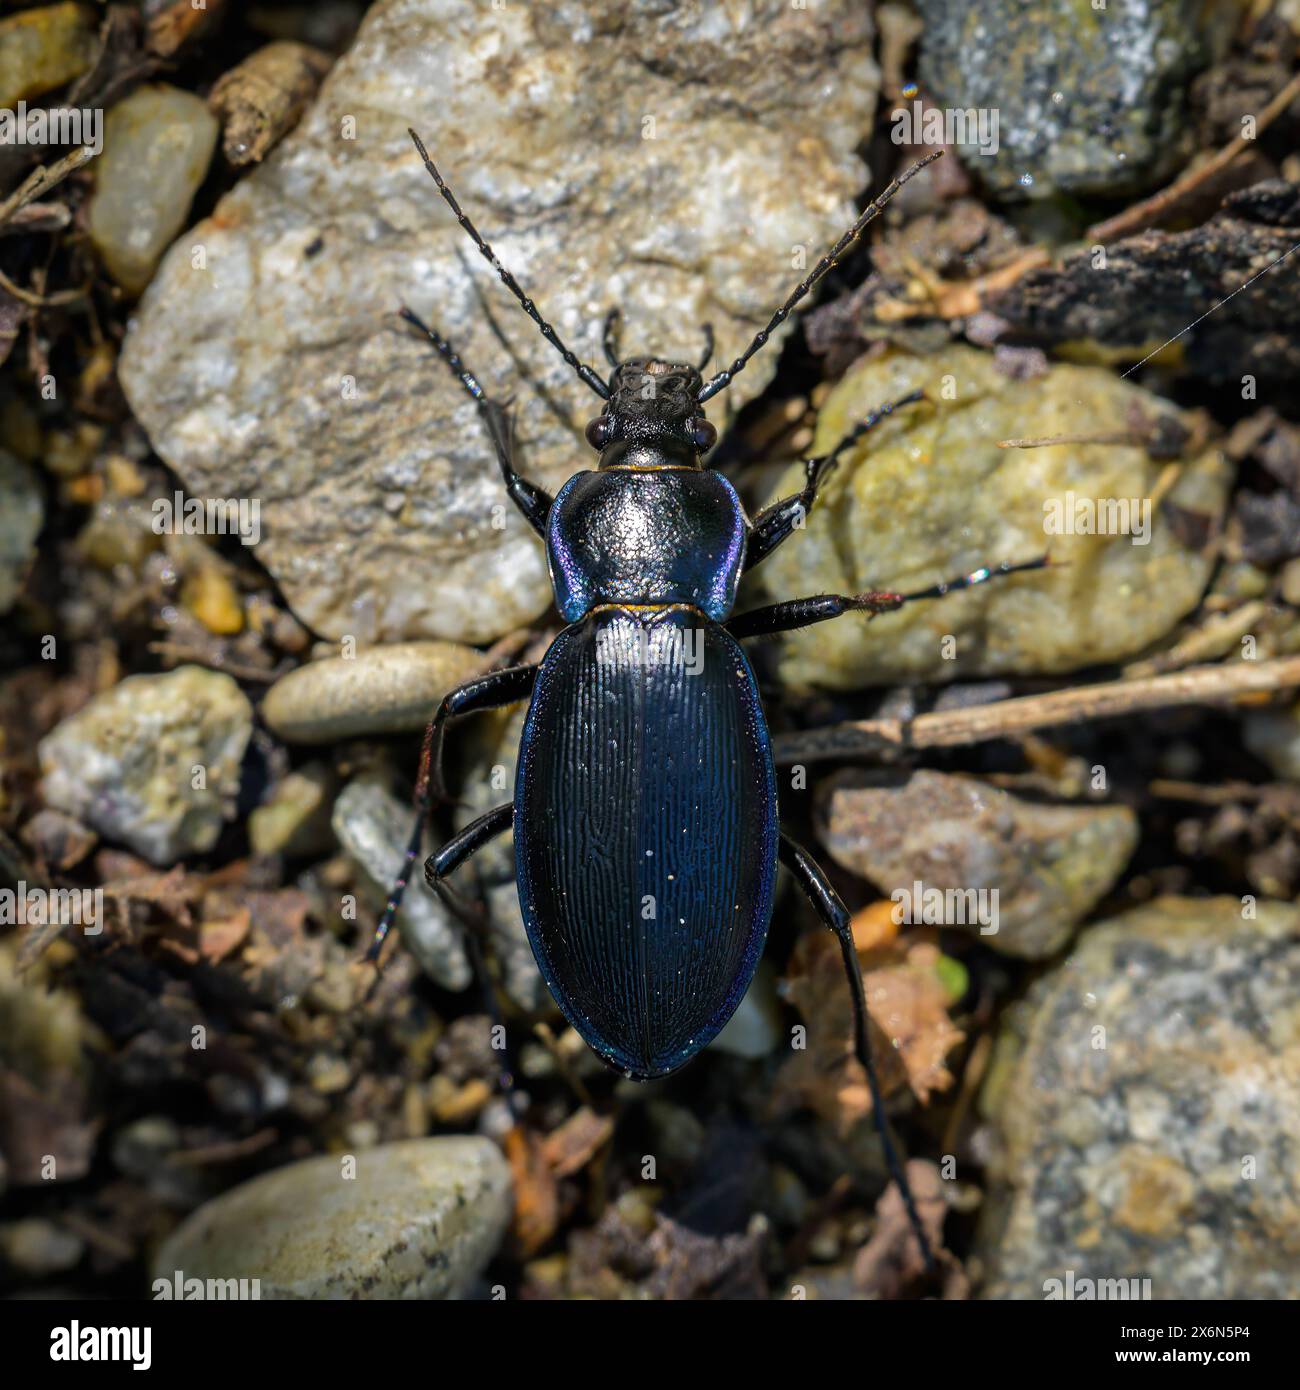 A big ground beetle Carabus scheidleri walking on the ground in a forest in Austria Leitzersdorf Austria Stock Photo